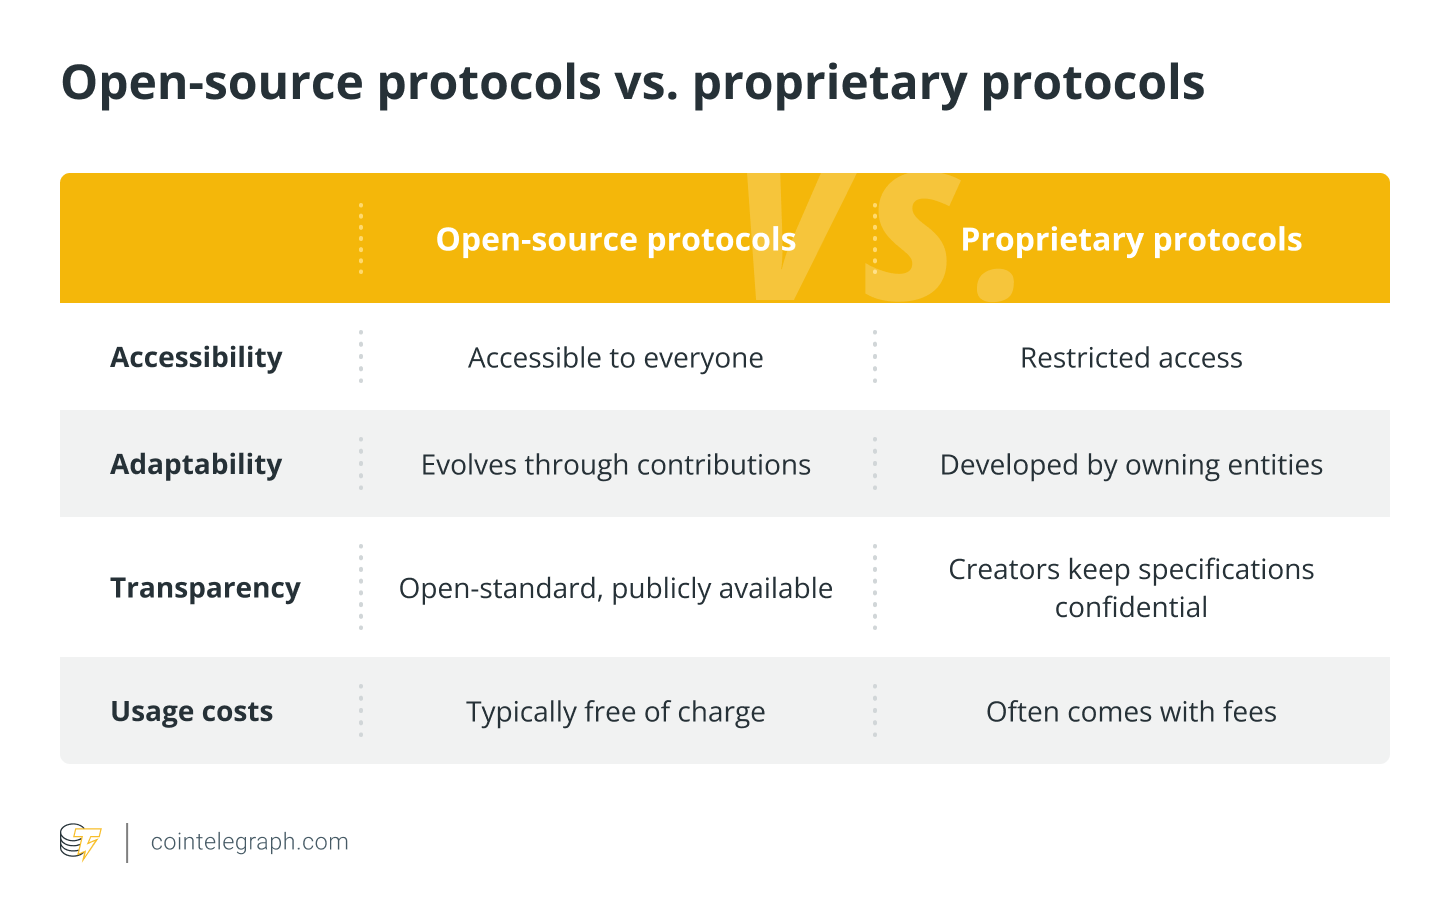 Open-source protocols vs proprietary protocols